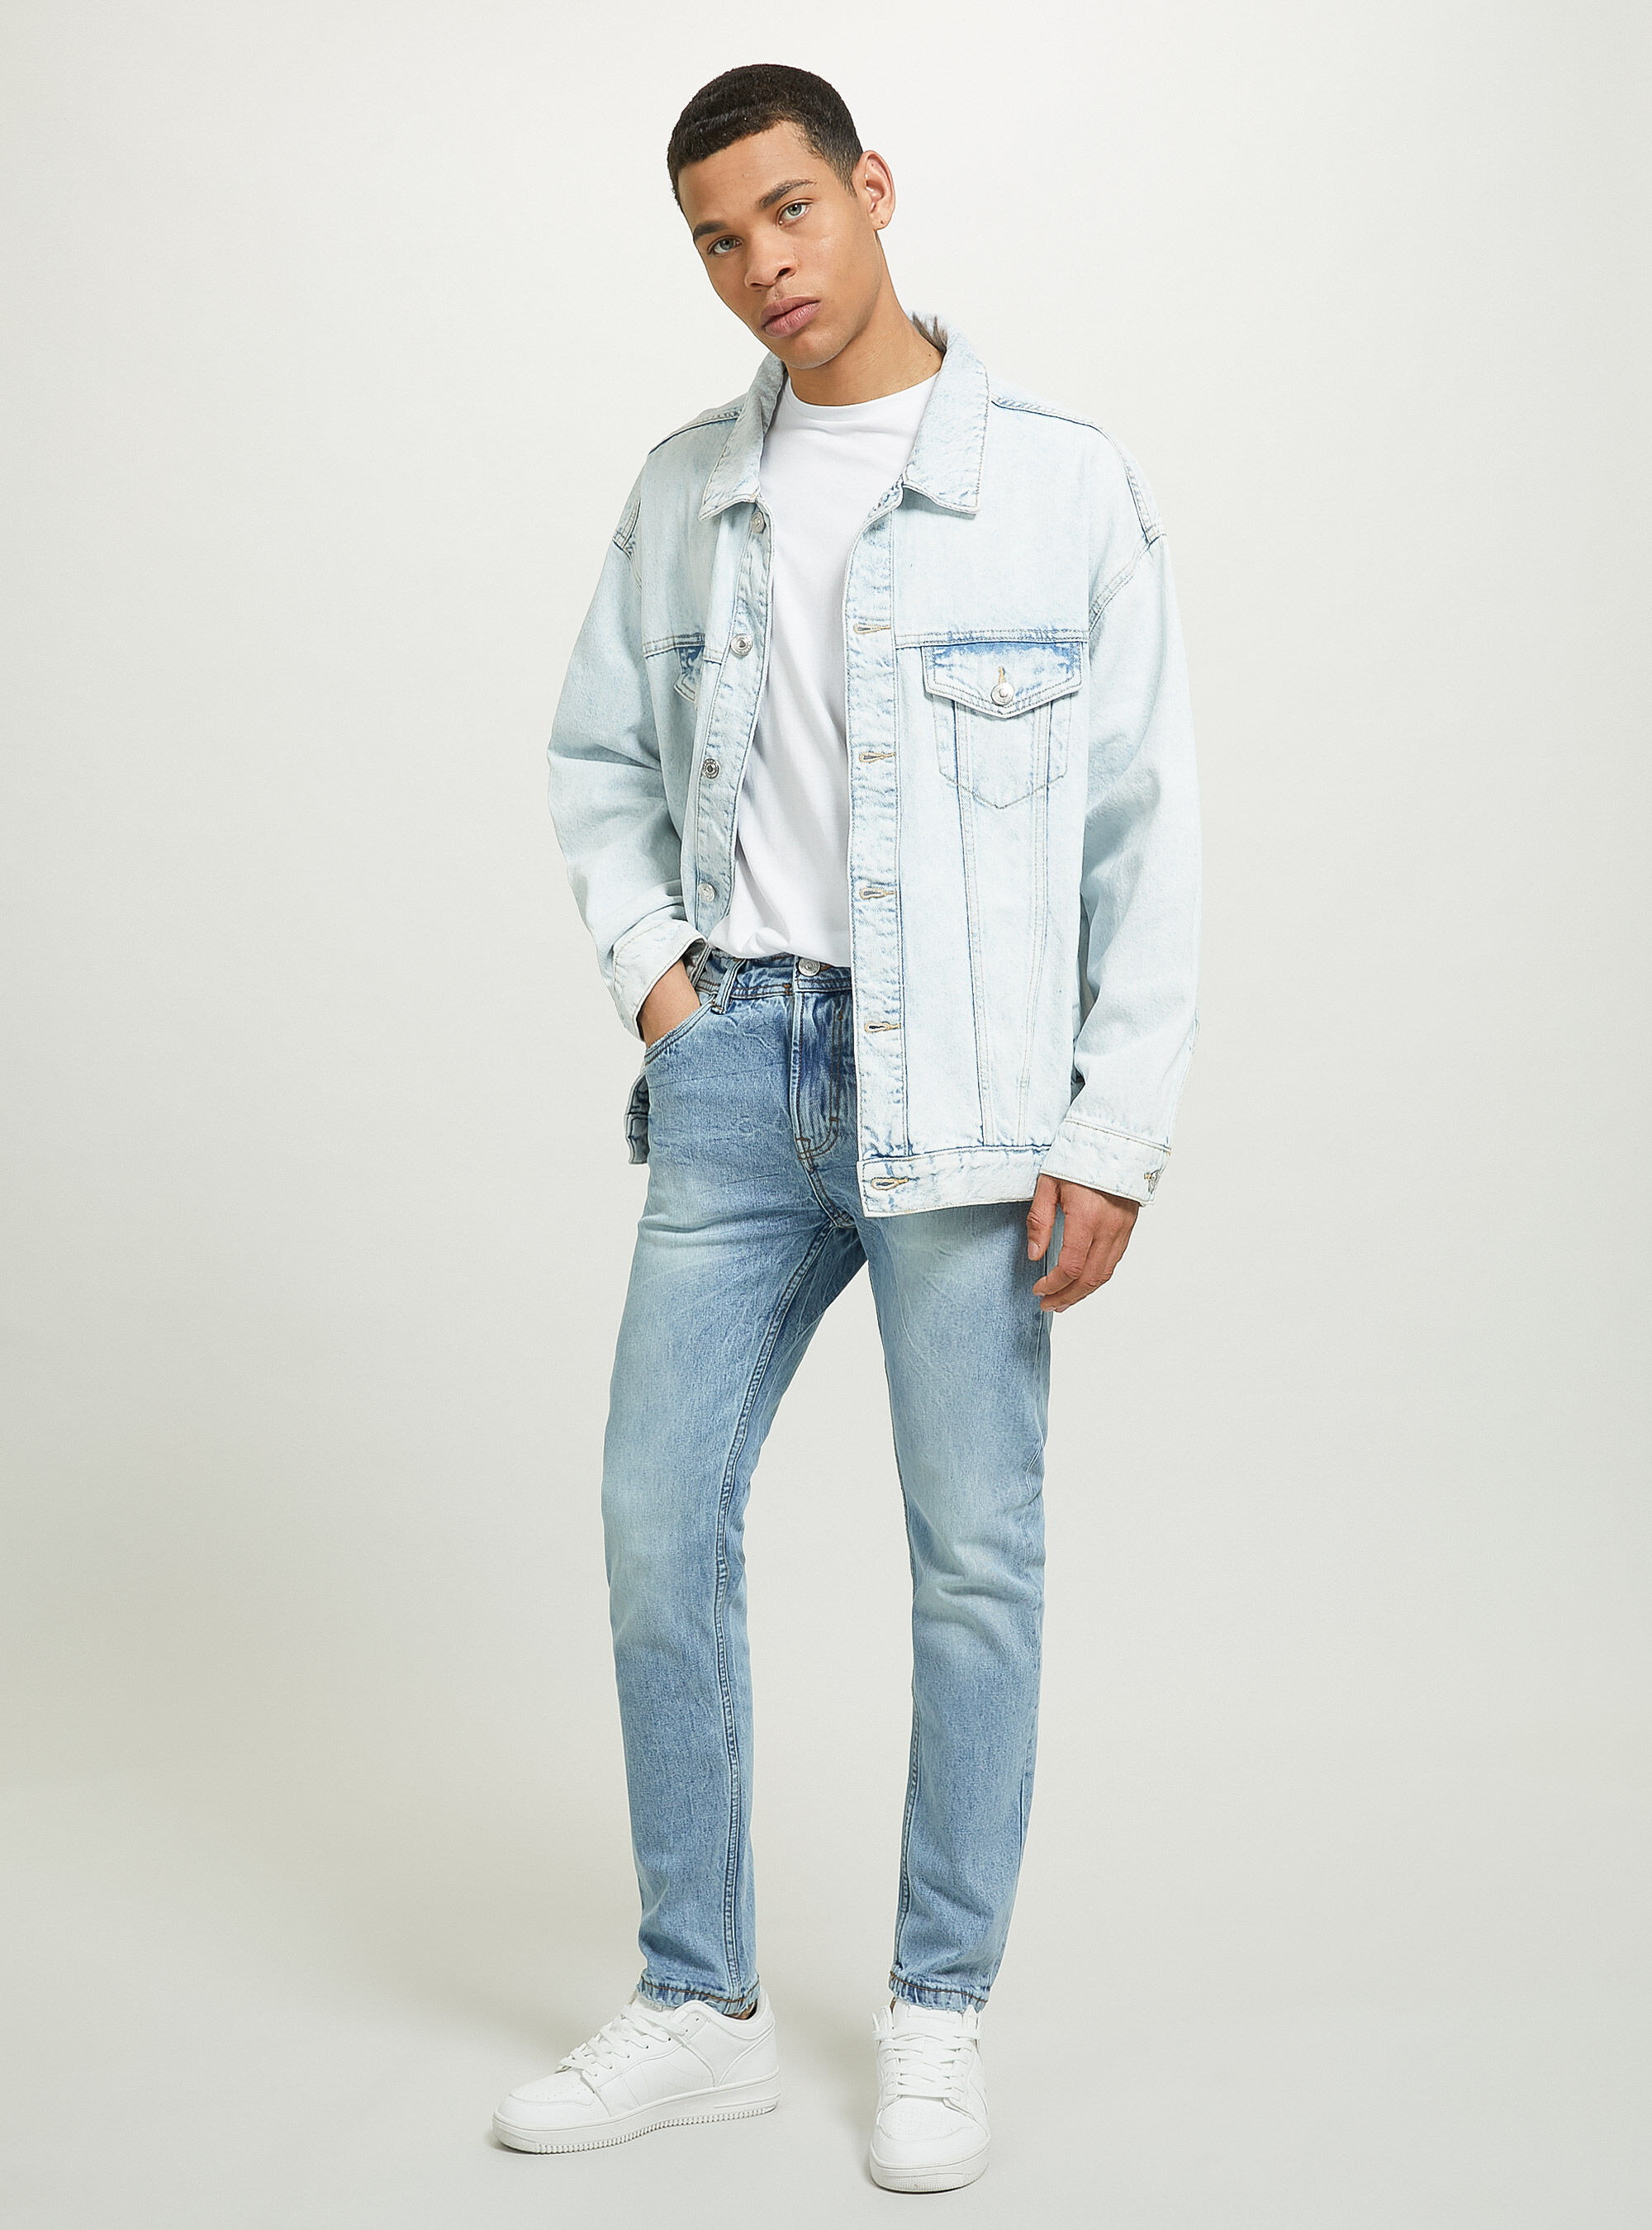 Levi's Happy Coats & Jackets for Girls Sizes (4+) | Mercari